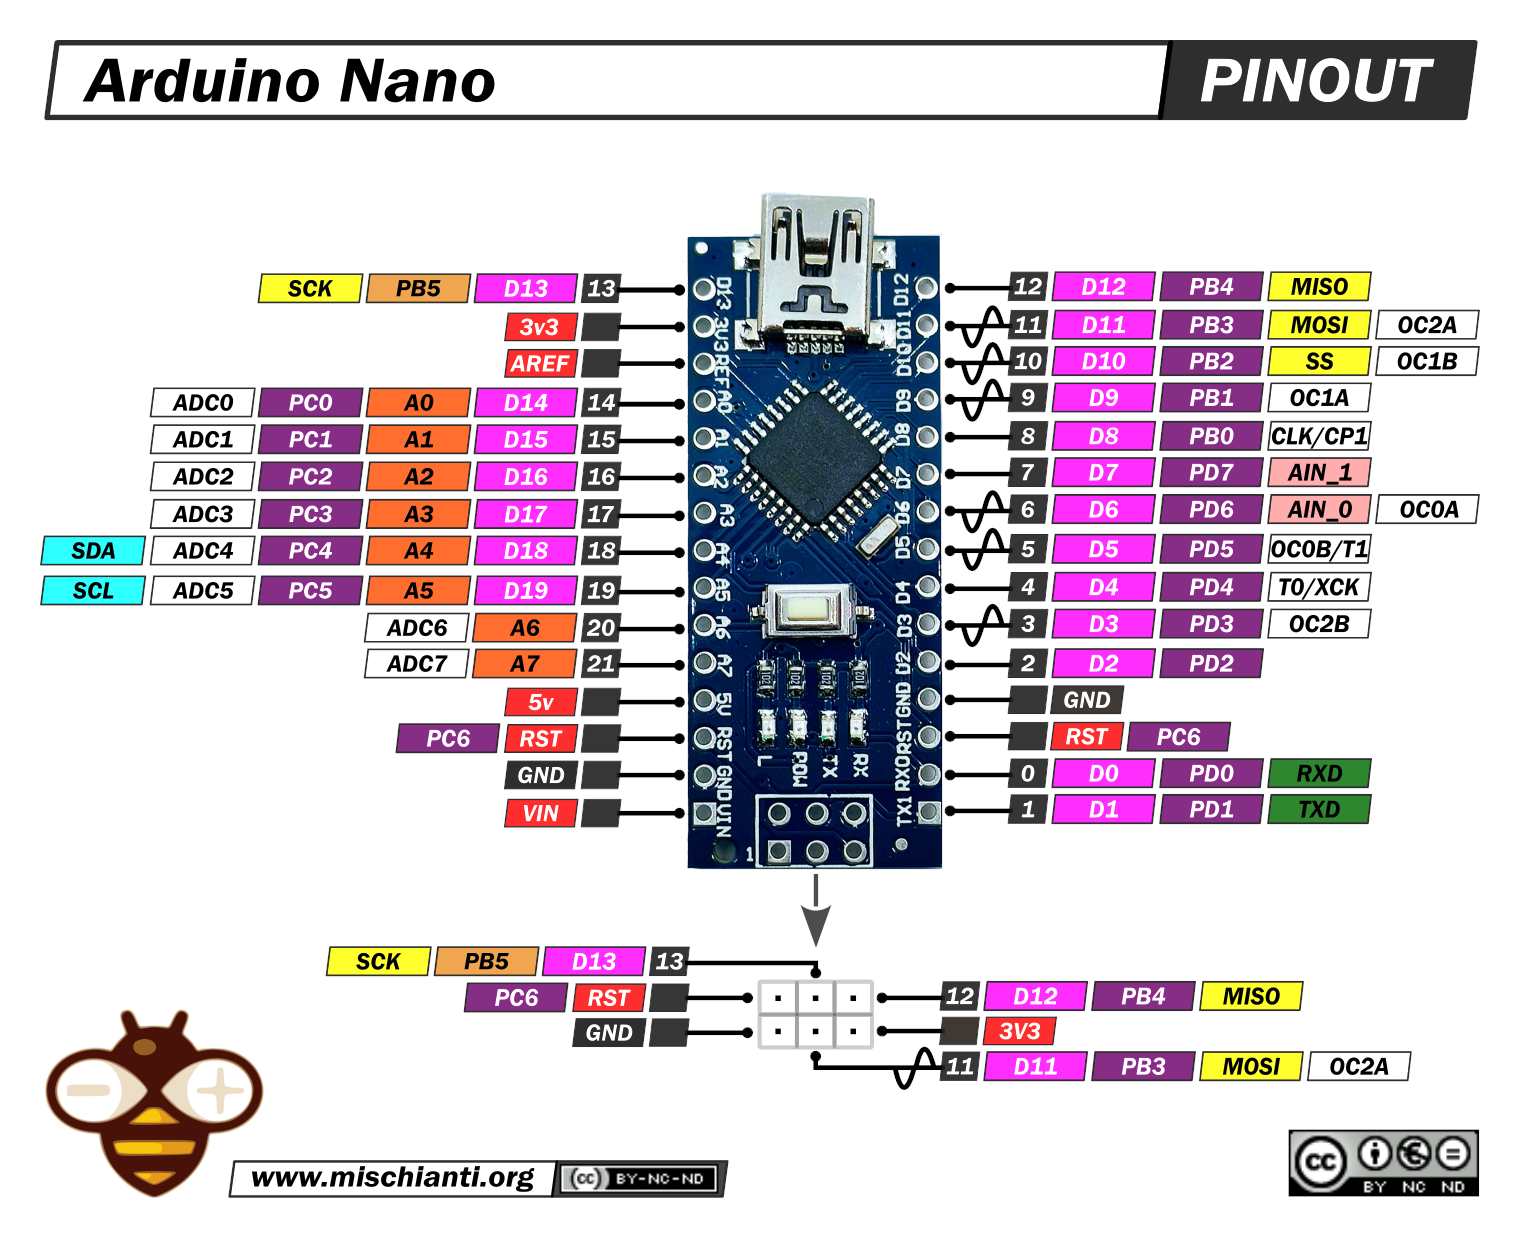 Arduino Nano: high-resolution pinout, datasheet and specs – Renzo